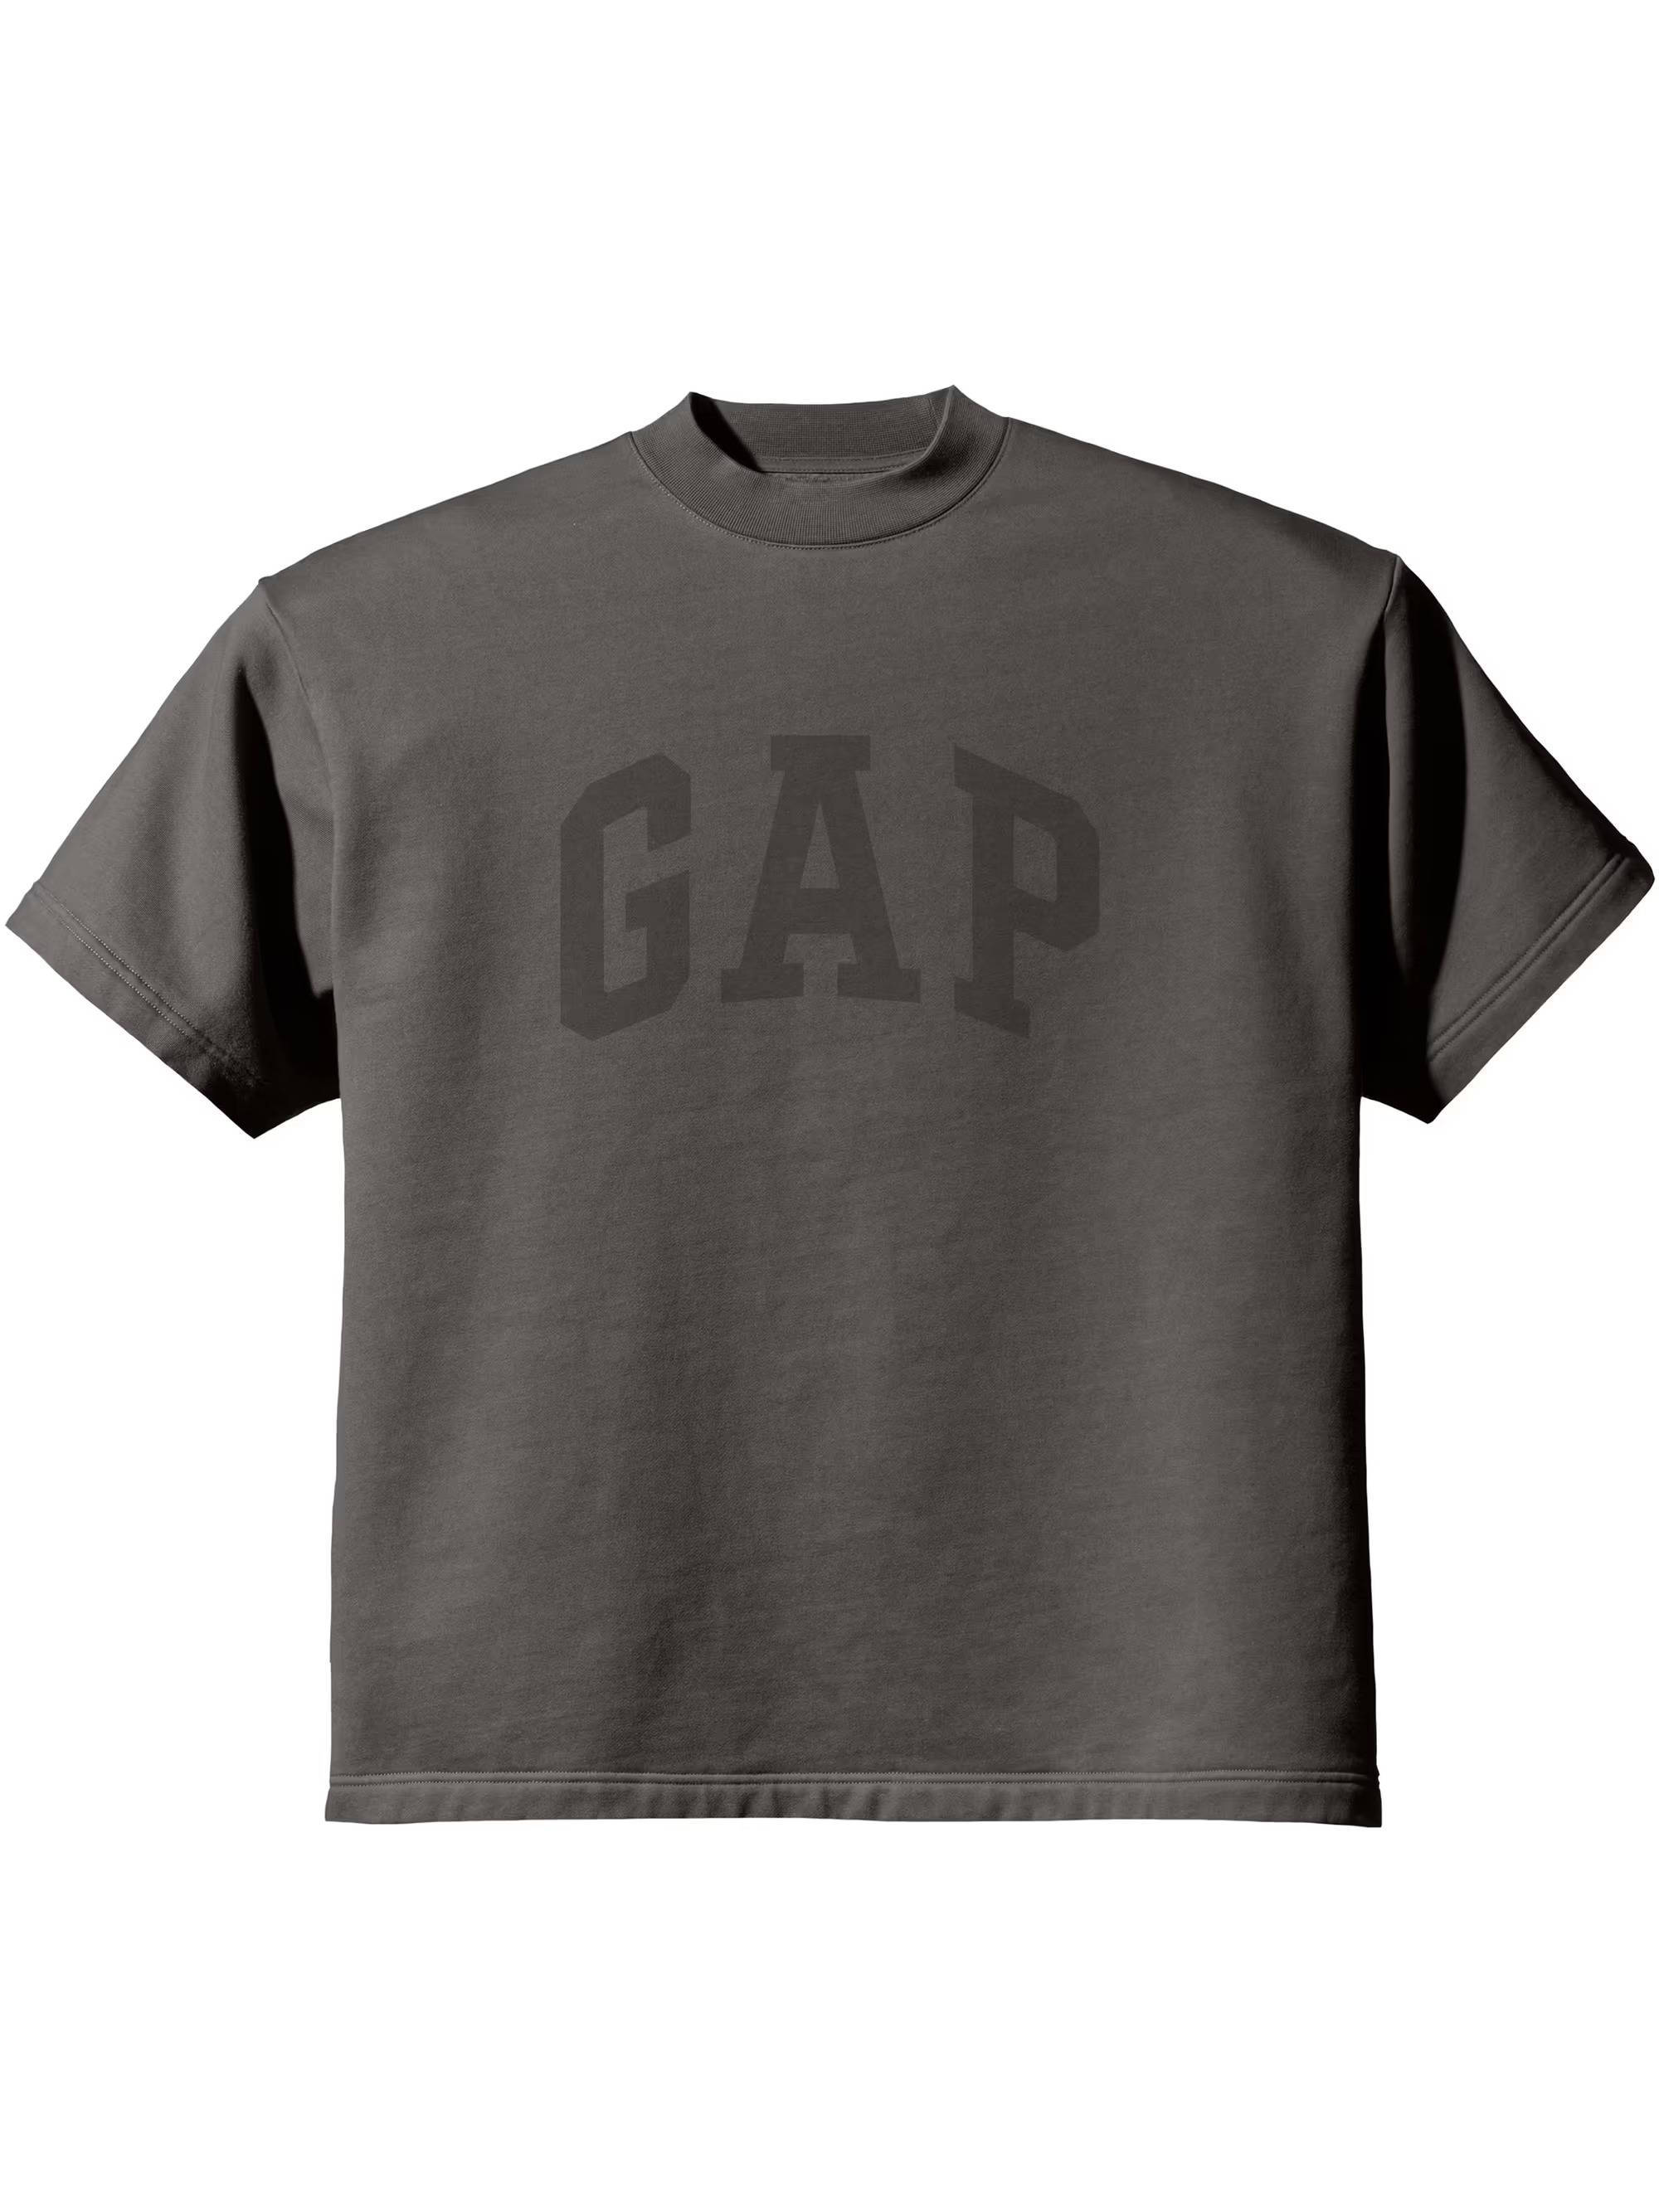 Yeezy Gap Engineered By Balenciaga Printed T-Shirt | Where To 